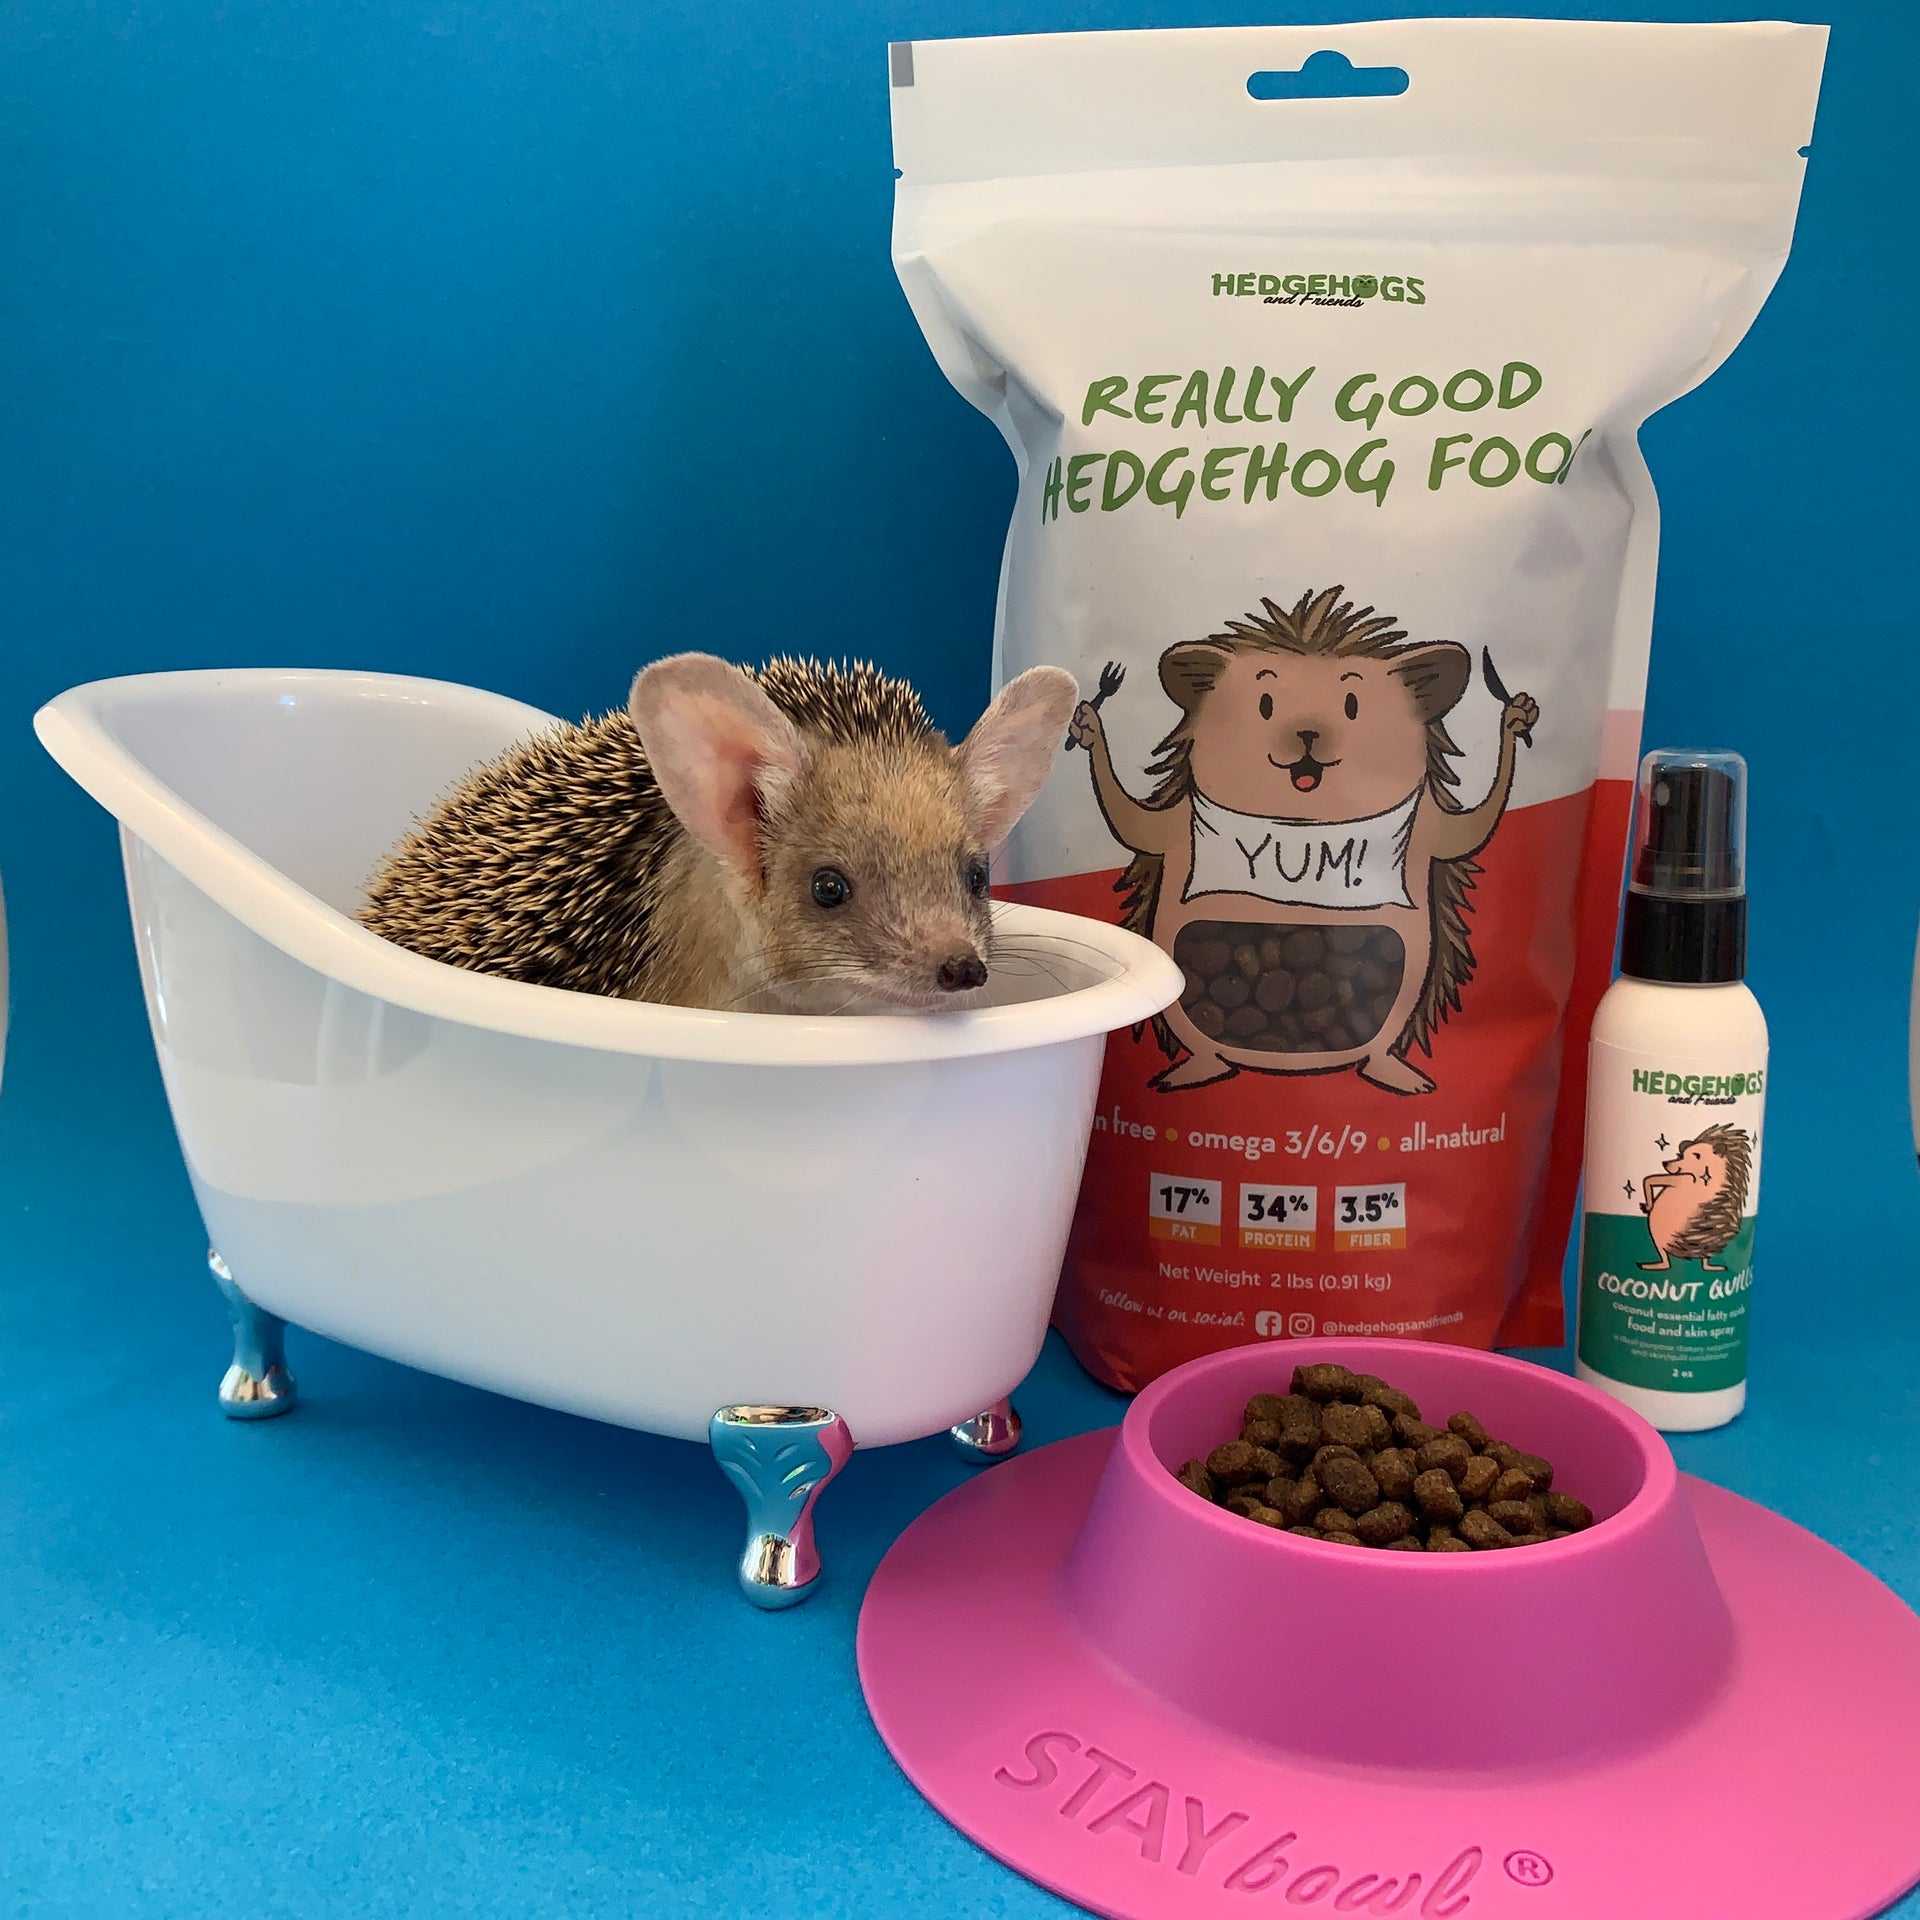 Hedgehog Food and Coconut Quills Bundle